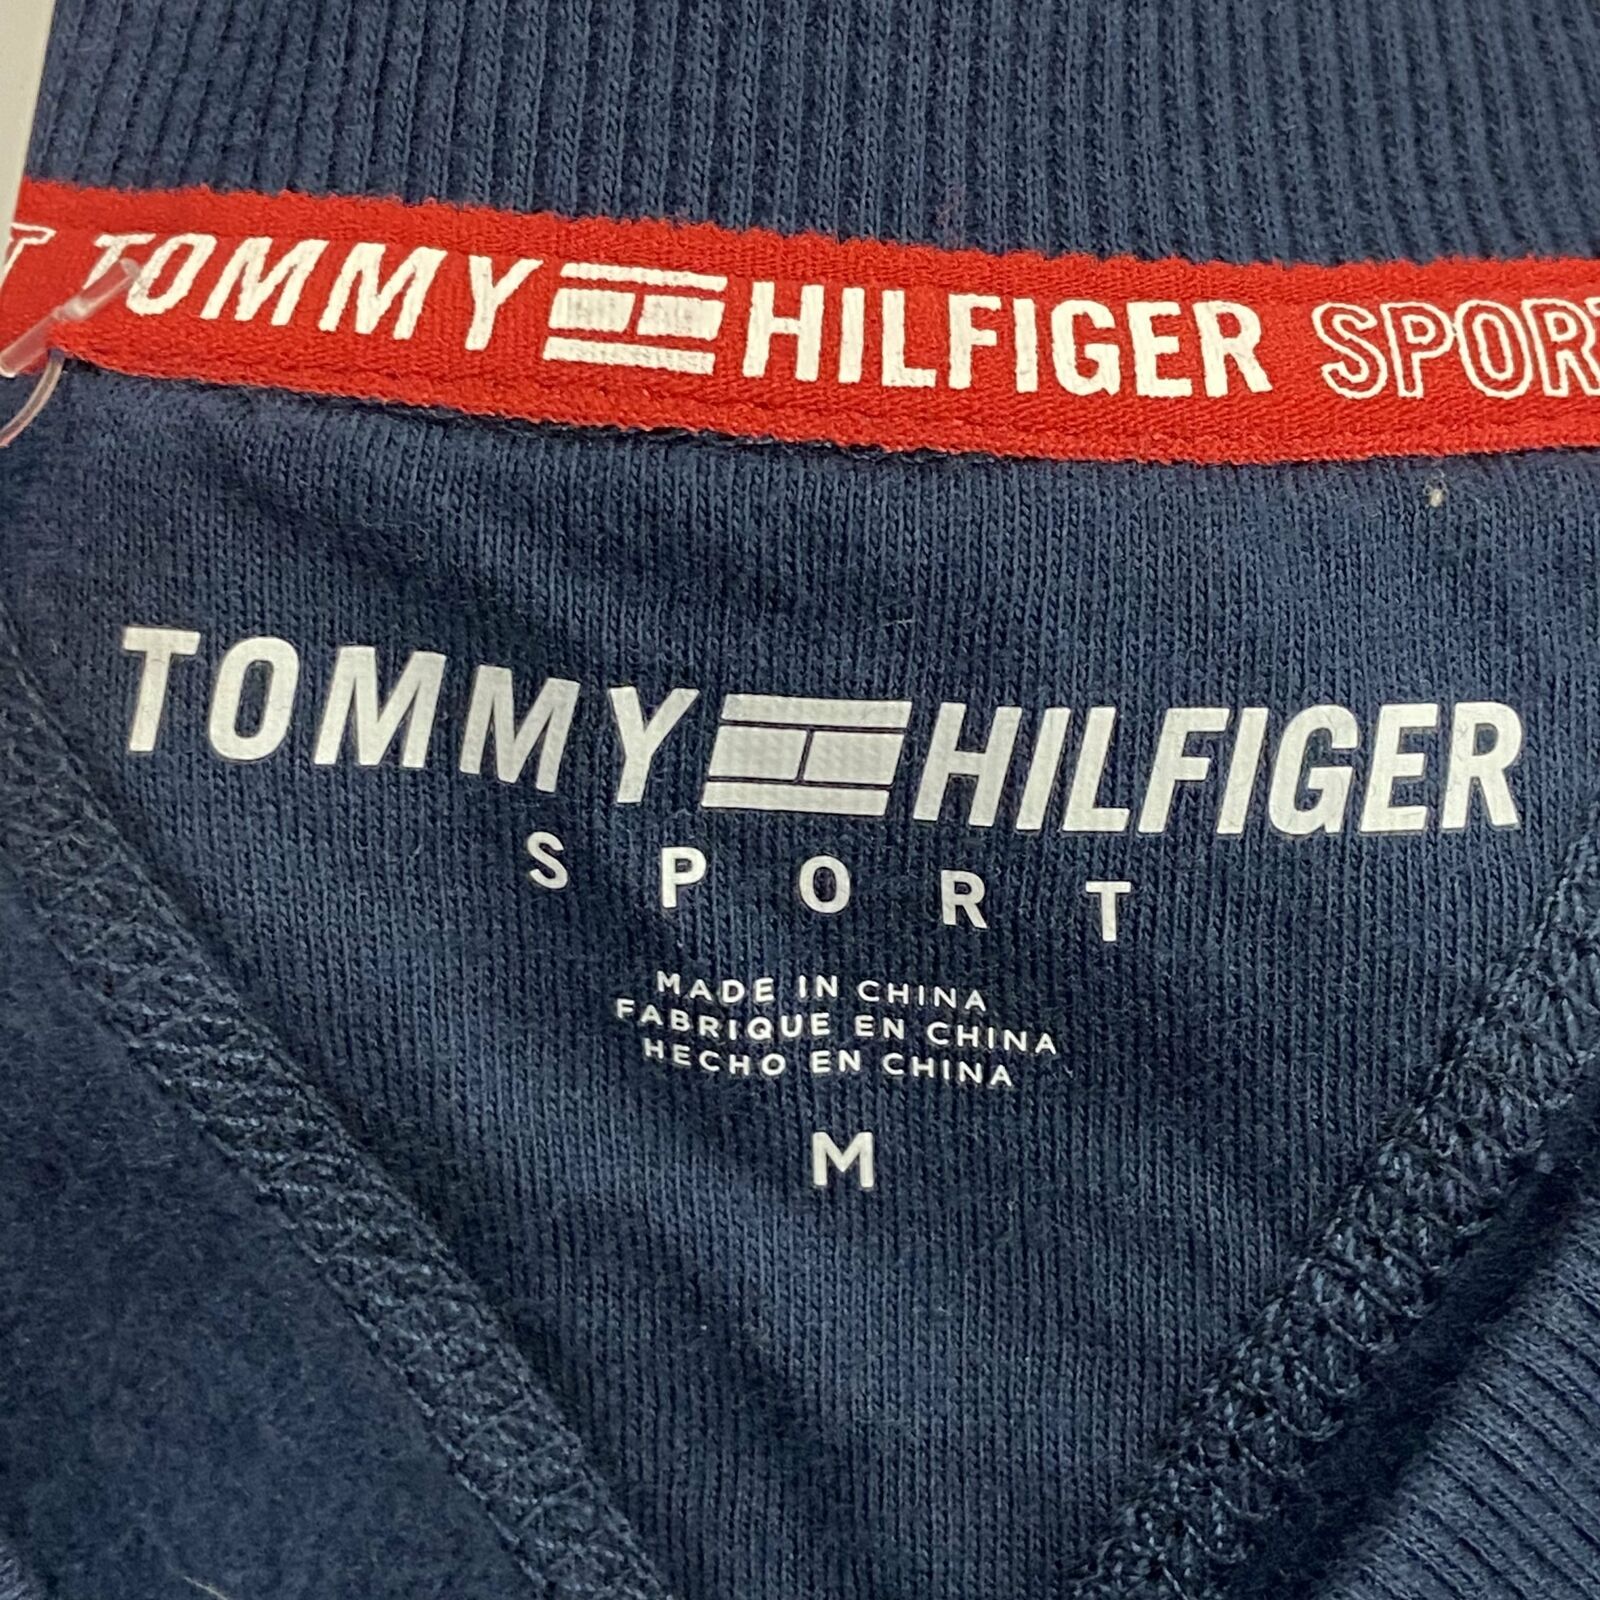 Hilfiger Sweater Sport exchange Tommy - Medium beyond Navy Dress Women\'s Tunic Size